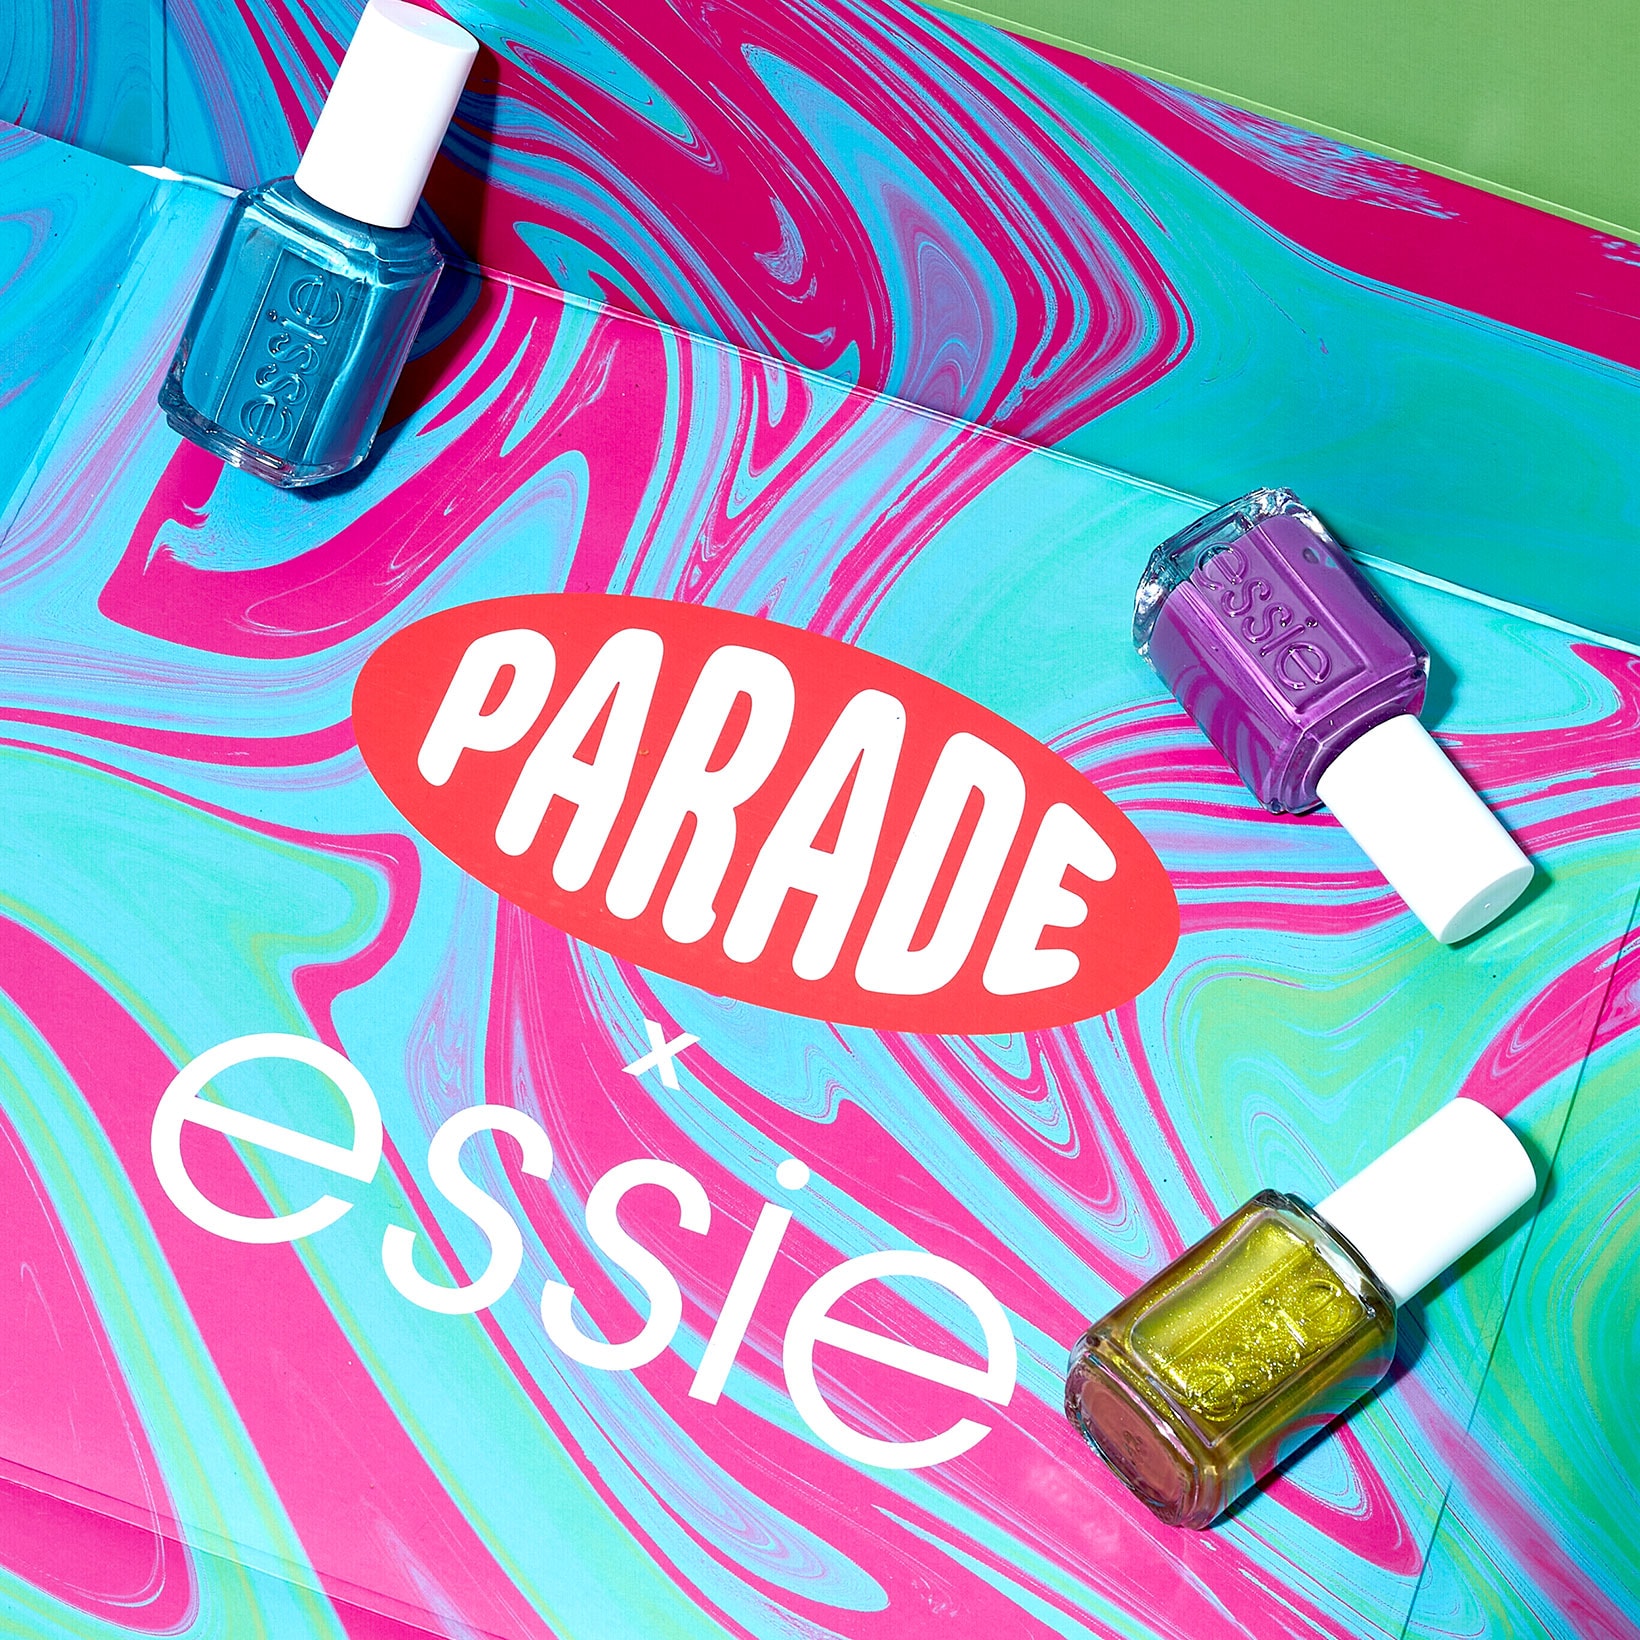 Parade essie Underwear Nail Polish Collaboration Release Price Info